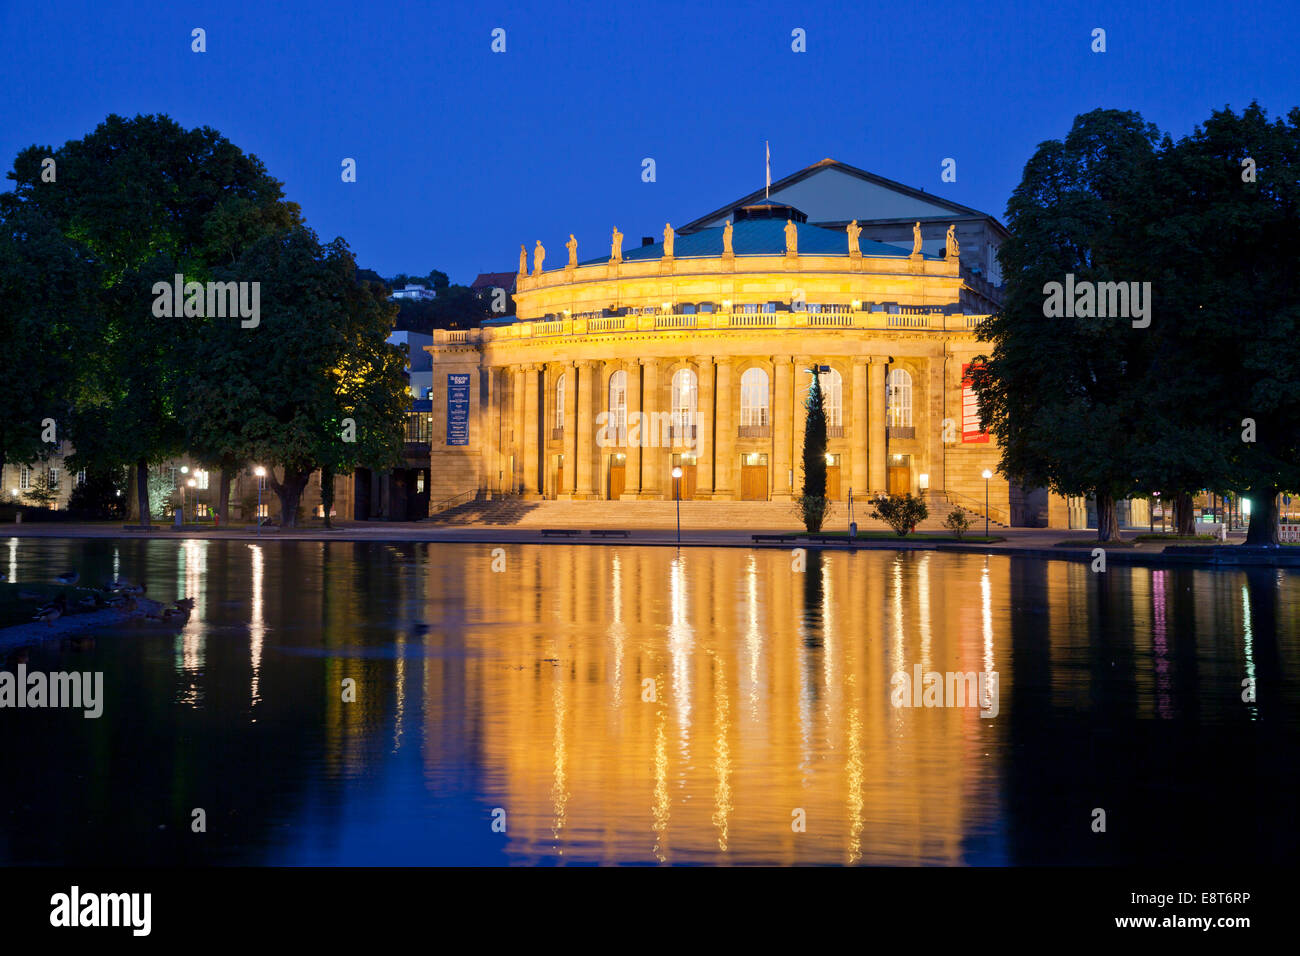 Opera House, Staatstheater Stuttgart, Teatro di Stato, nel parco Schlossgarten di notte, Stoccarda, Baden-Württemberg, Germania Foto Stock